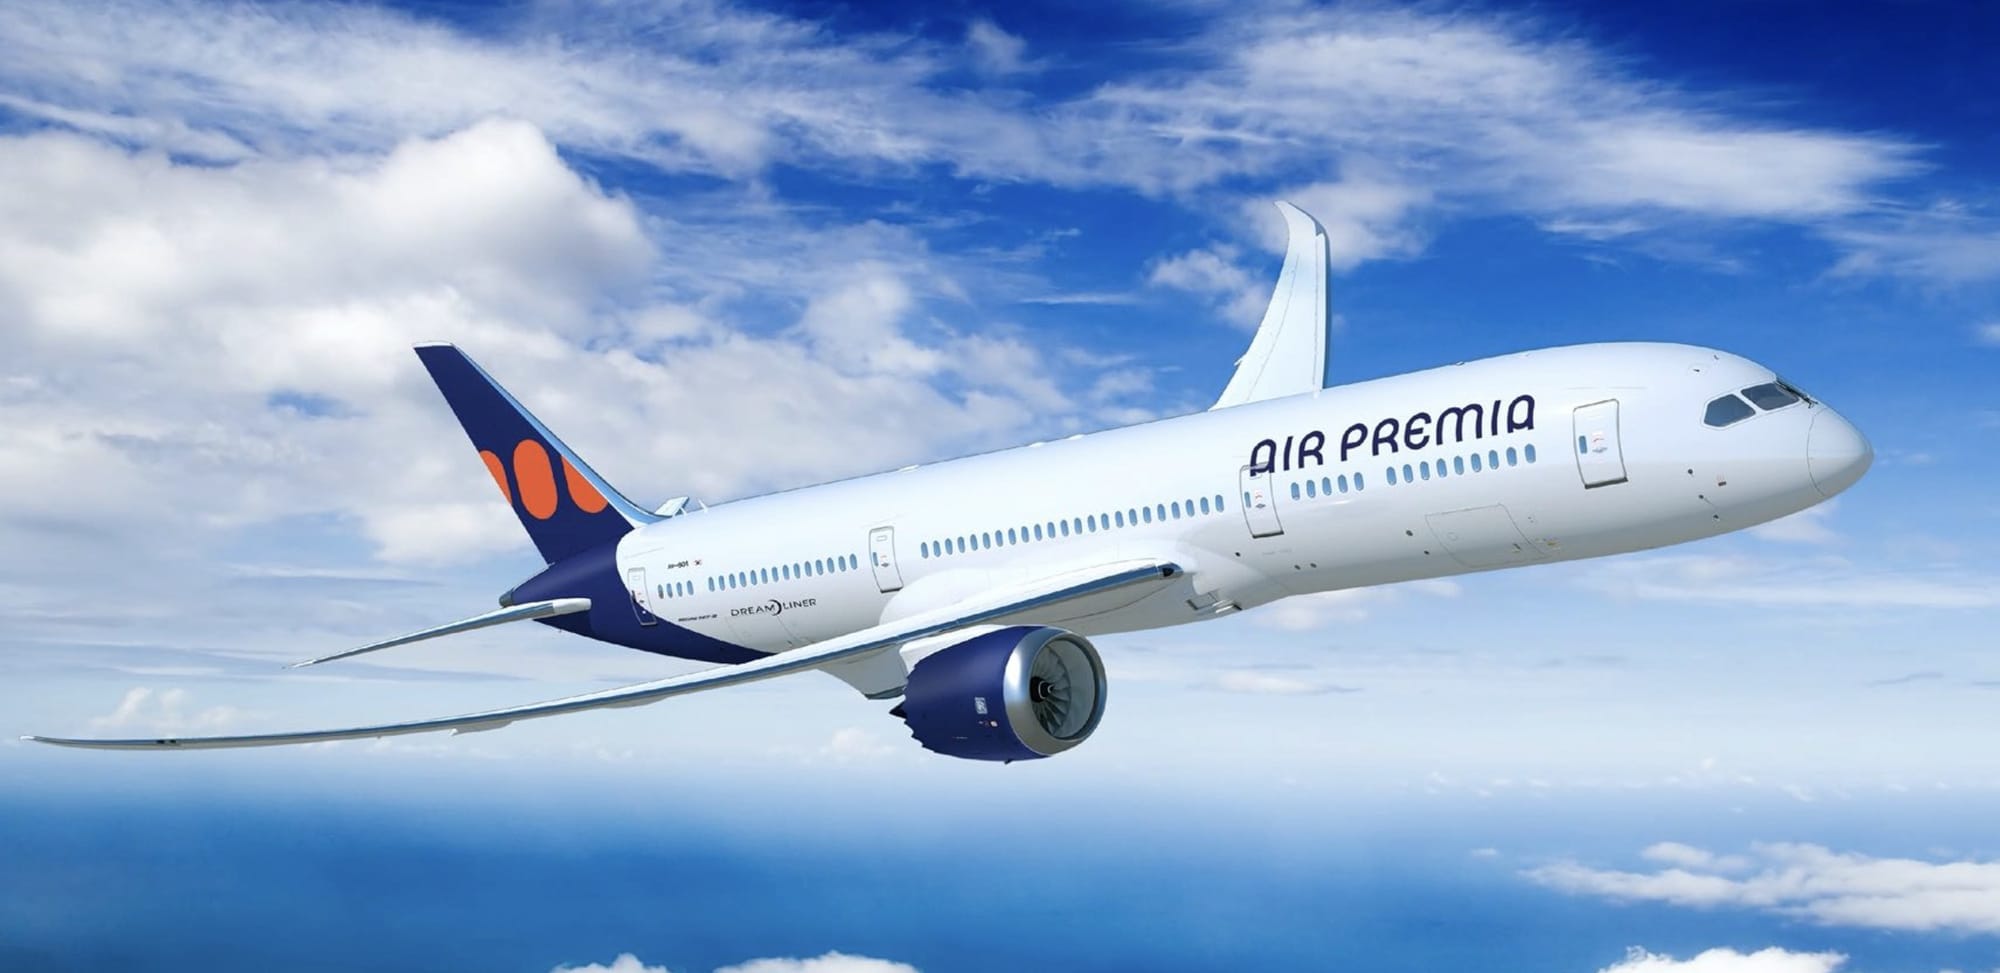 Korean Air to lease four B787-9s to Air Premia to resolve 